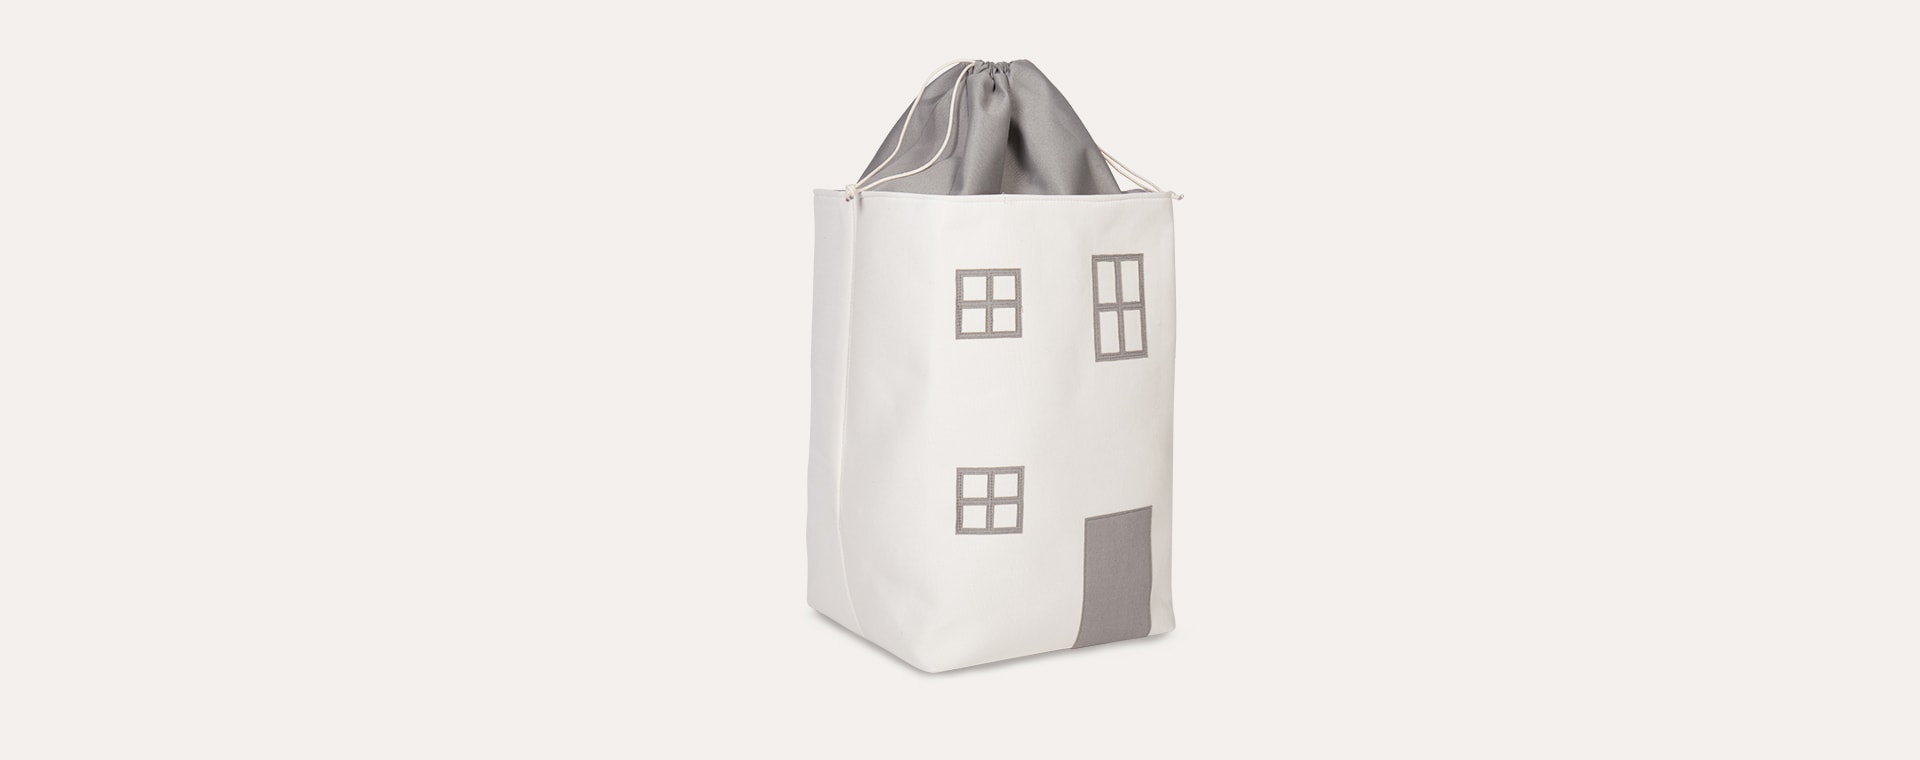 Grey Childhome Toy Box House Bag